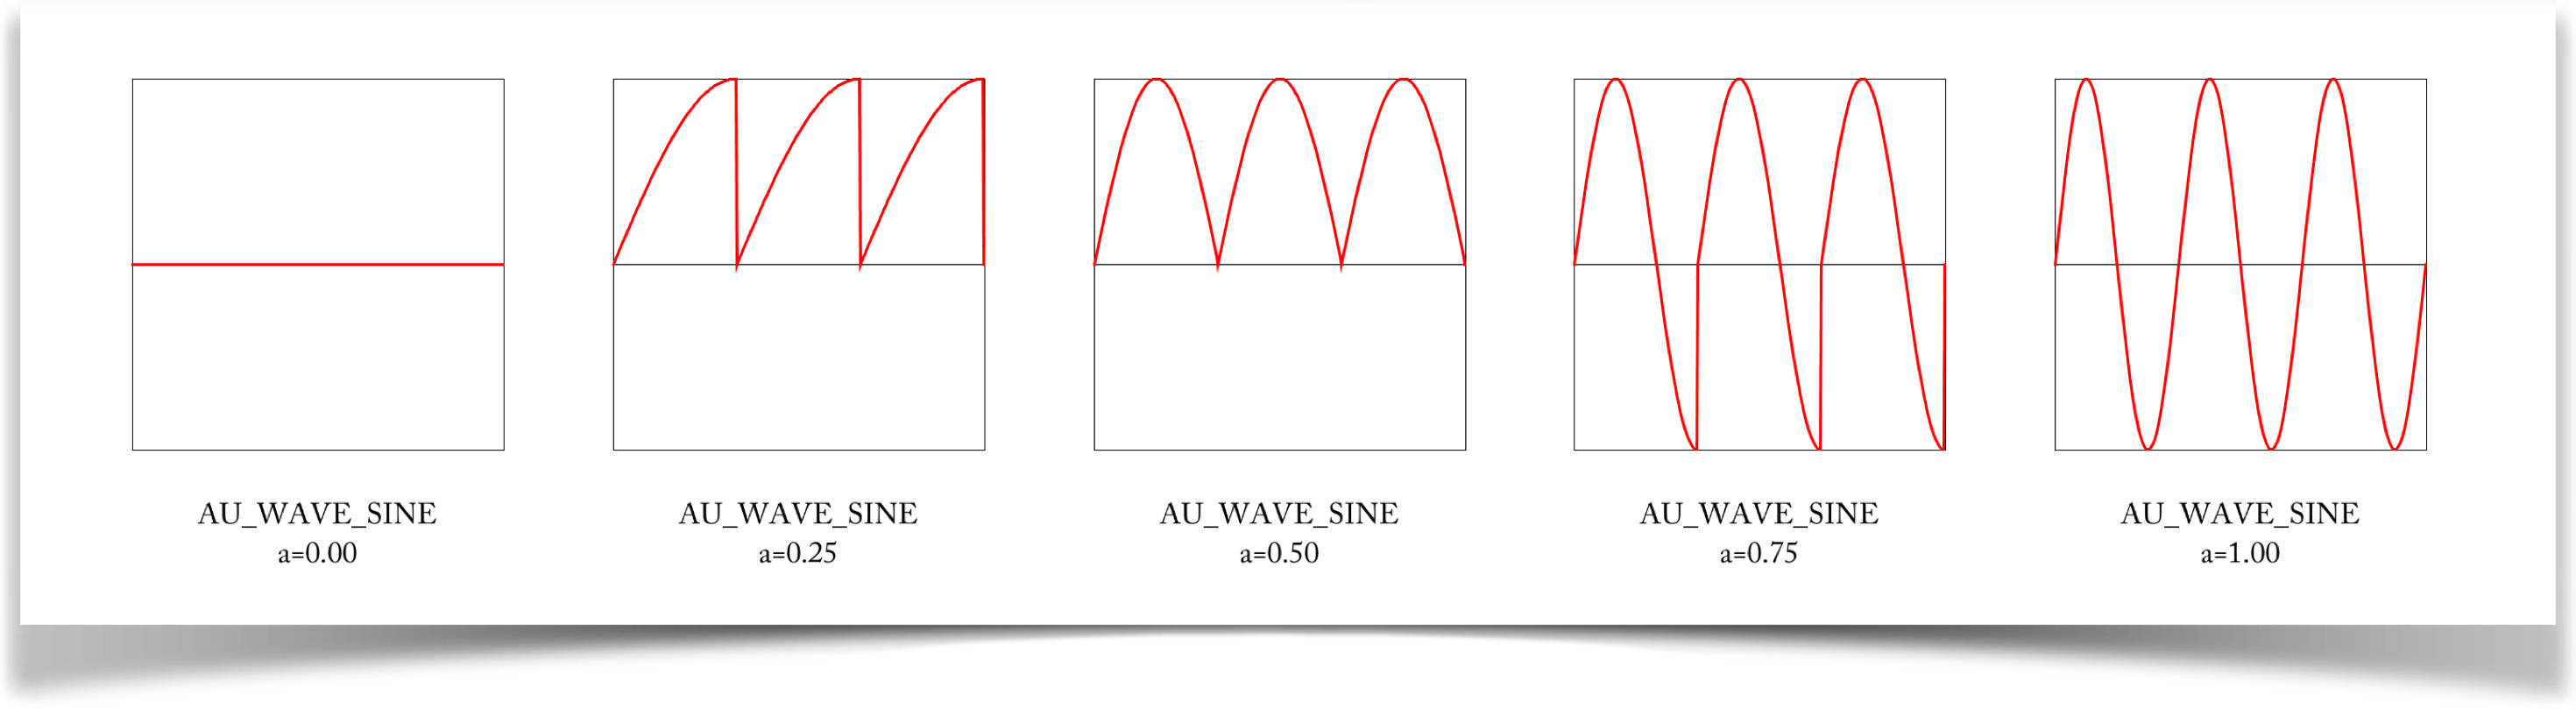 The sine wave